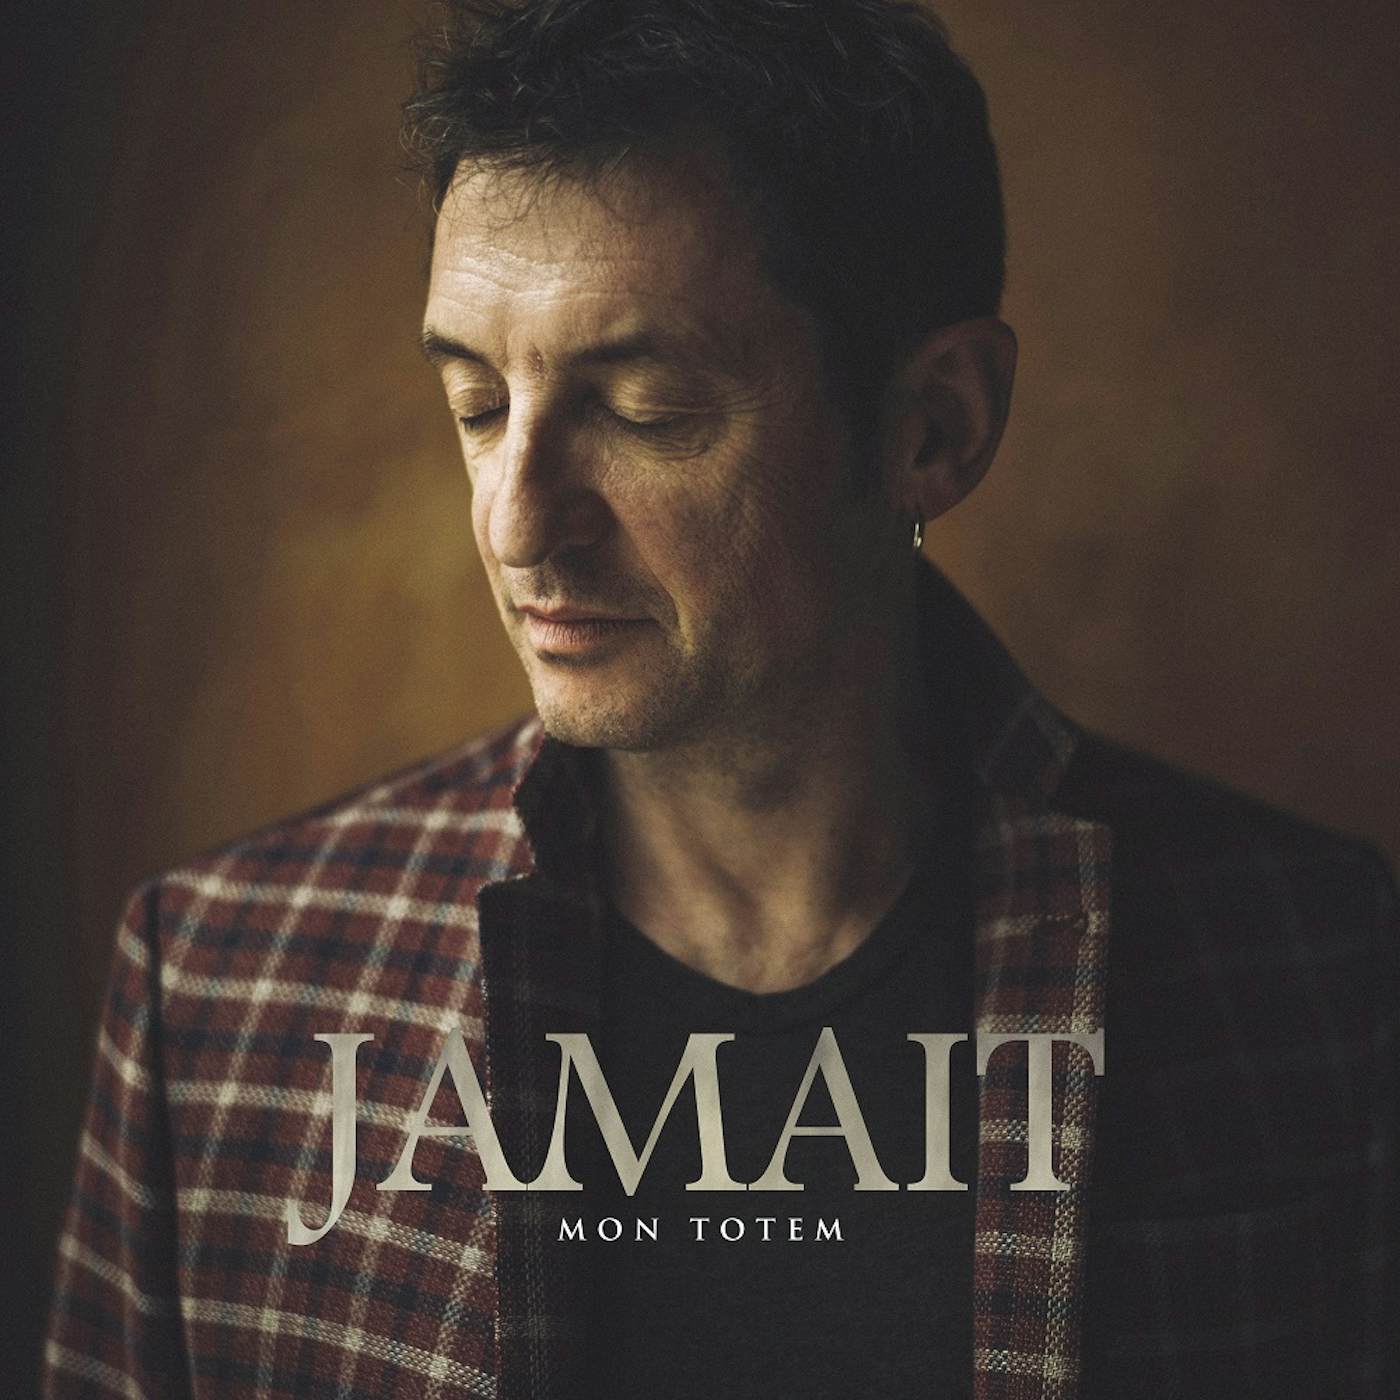 Yves Jamait Mon totem Vinyl Record